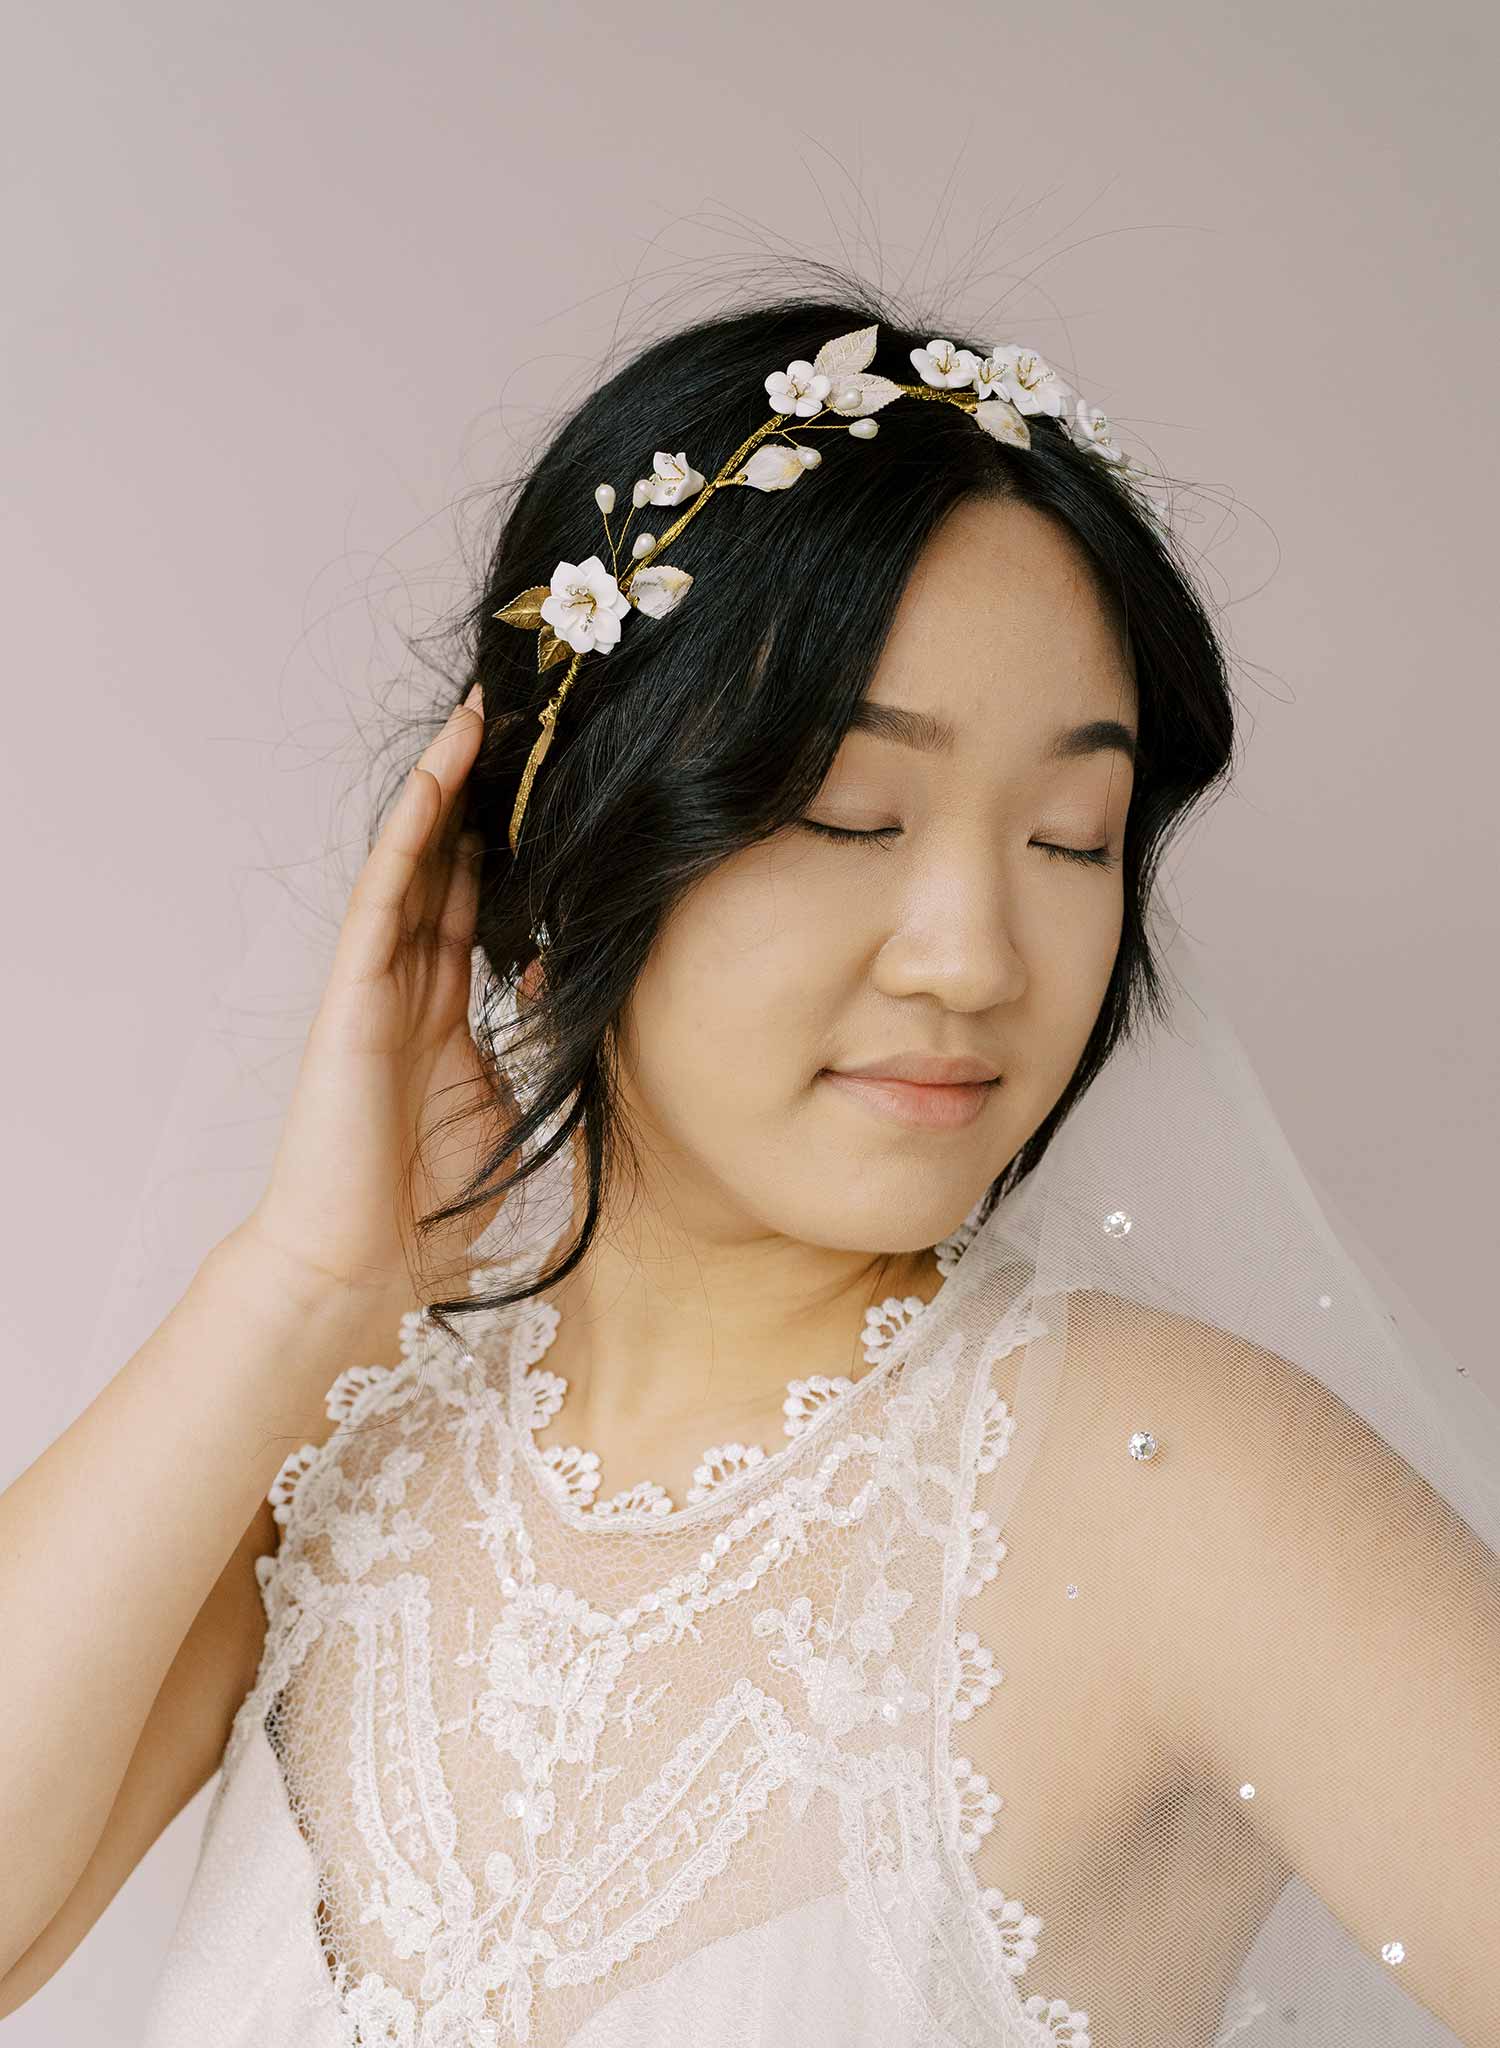 Flower Crown and Veil, Weddings, Hair and Makeup